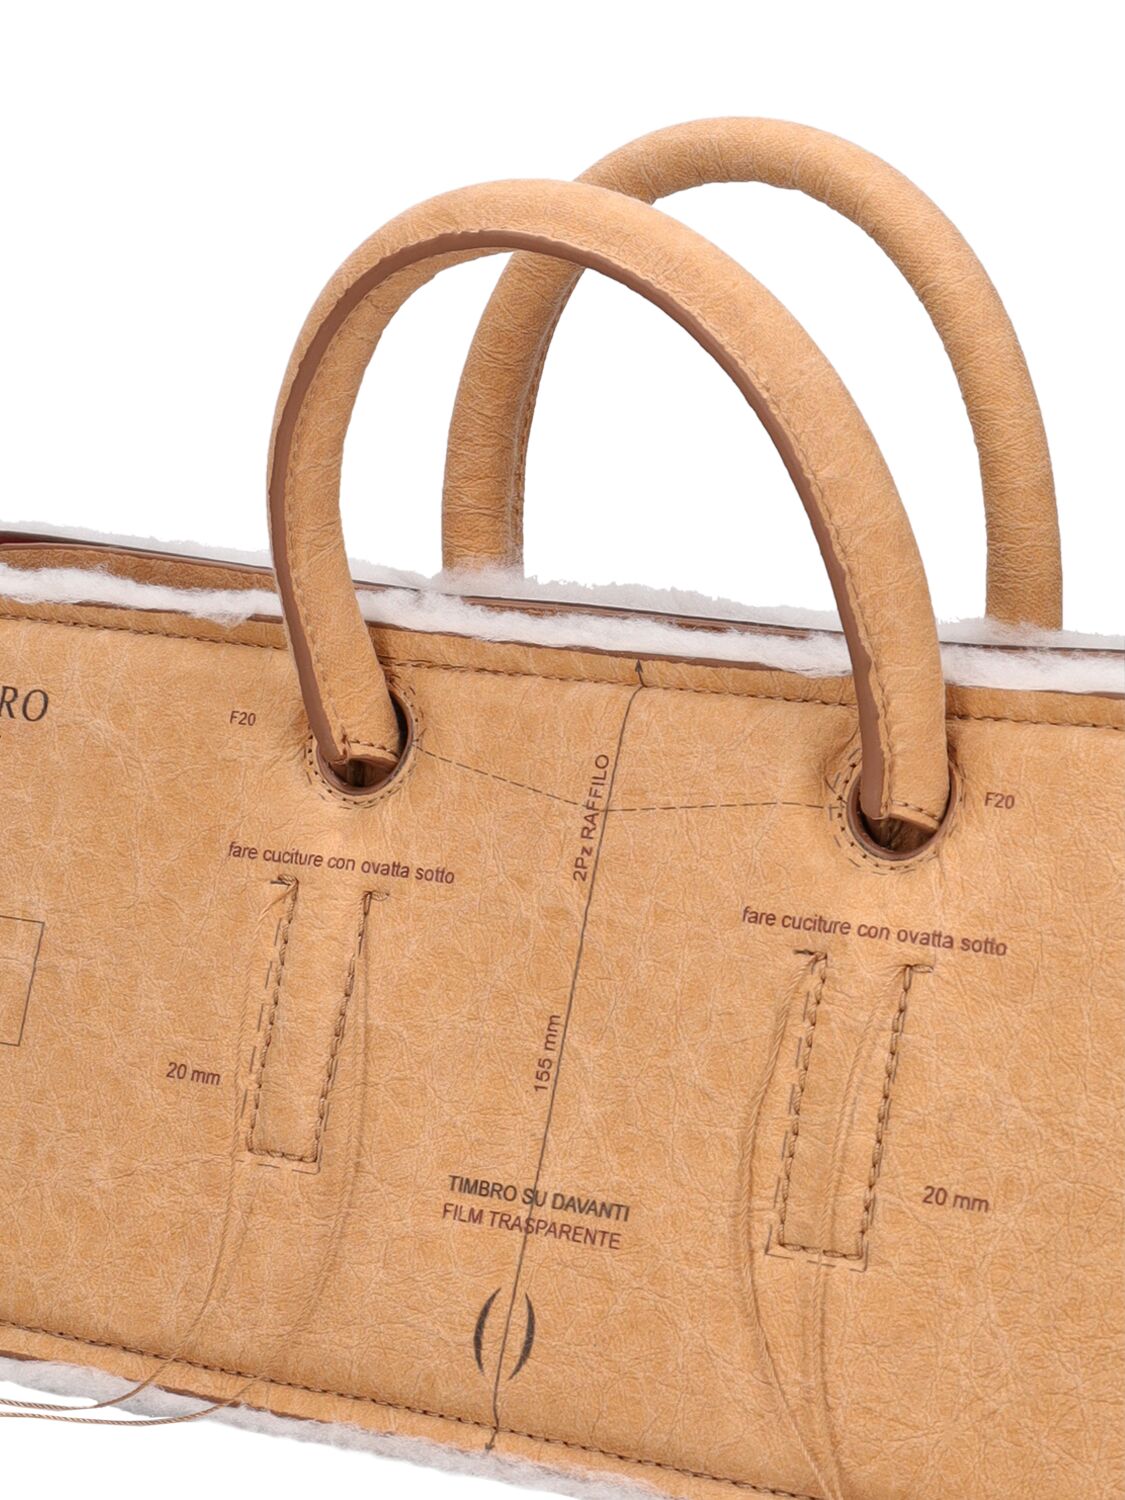 Shop Dentro Otto Paper Top Handle Bag In Brown